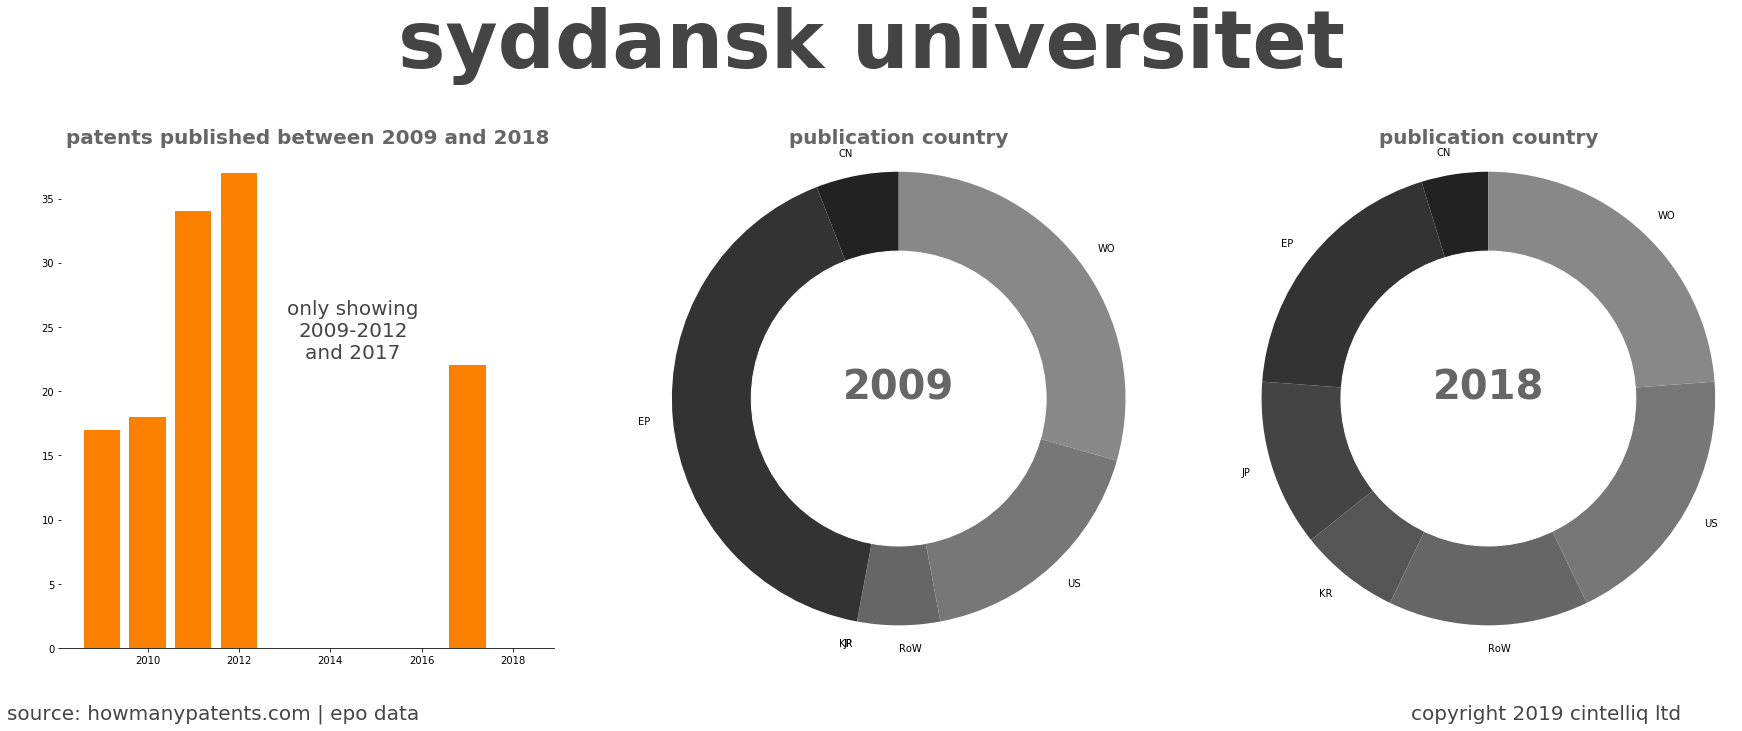 summary of patents for Syddansk Universitet